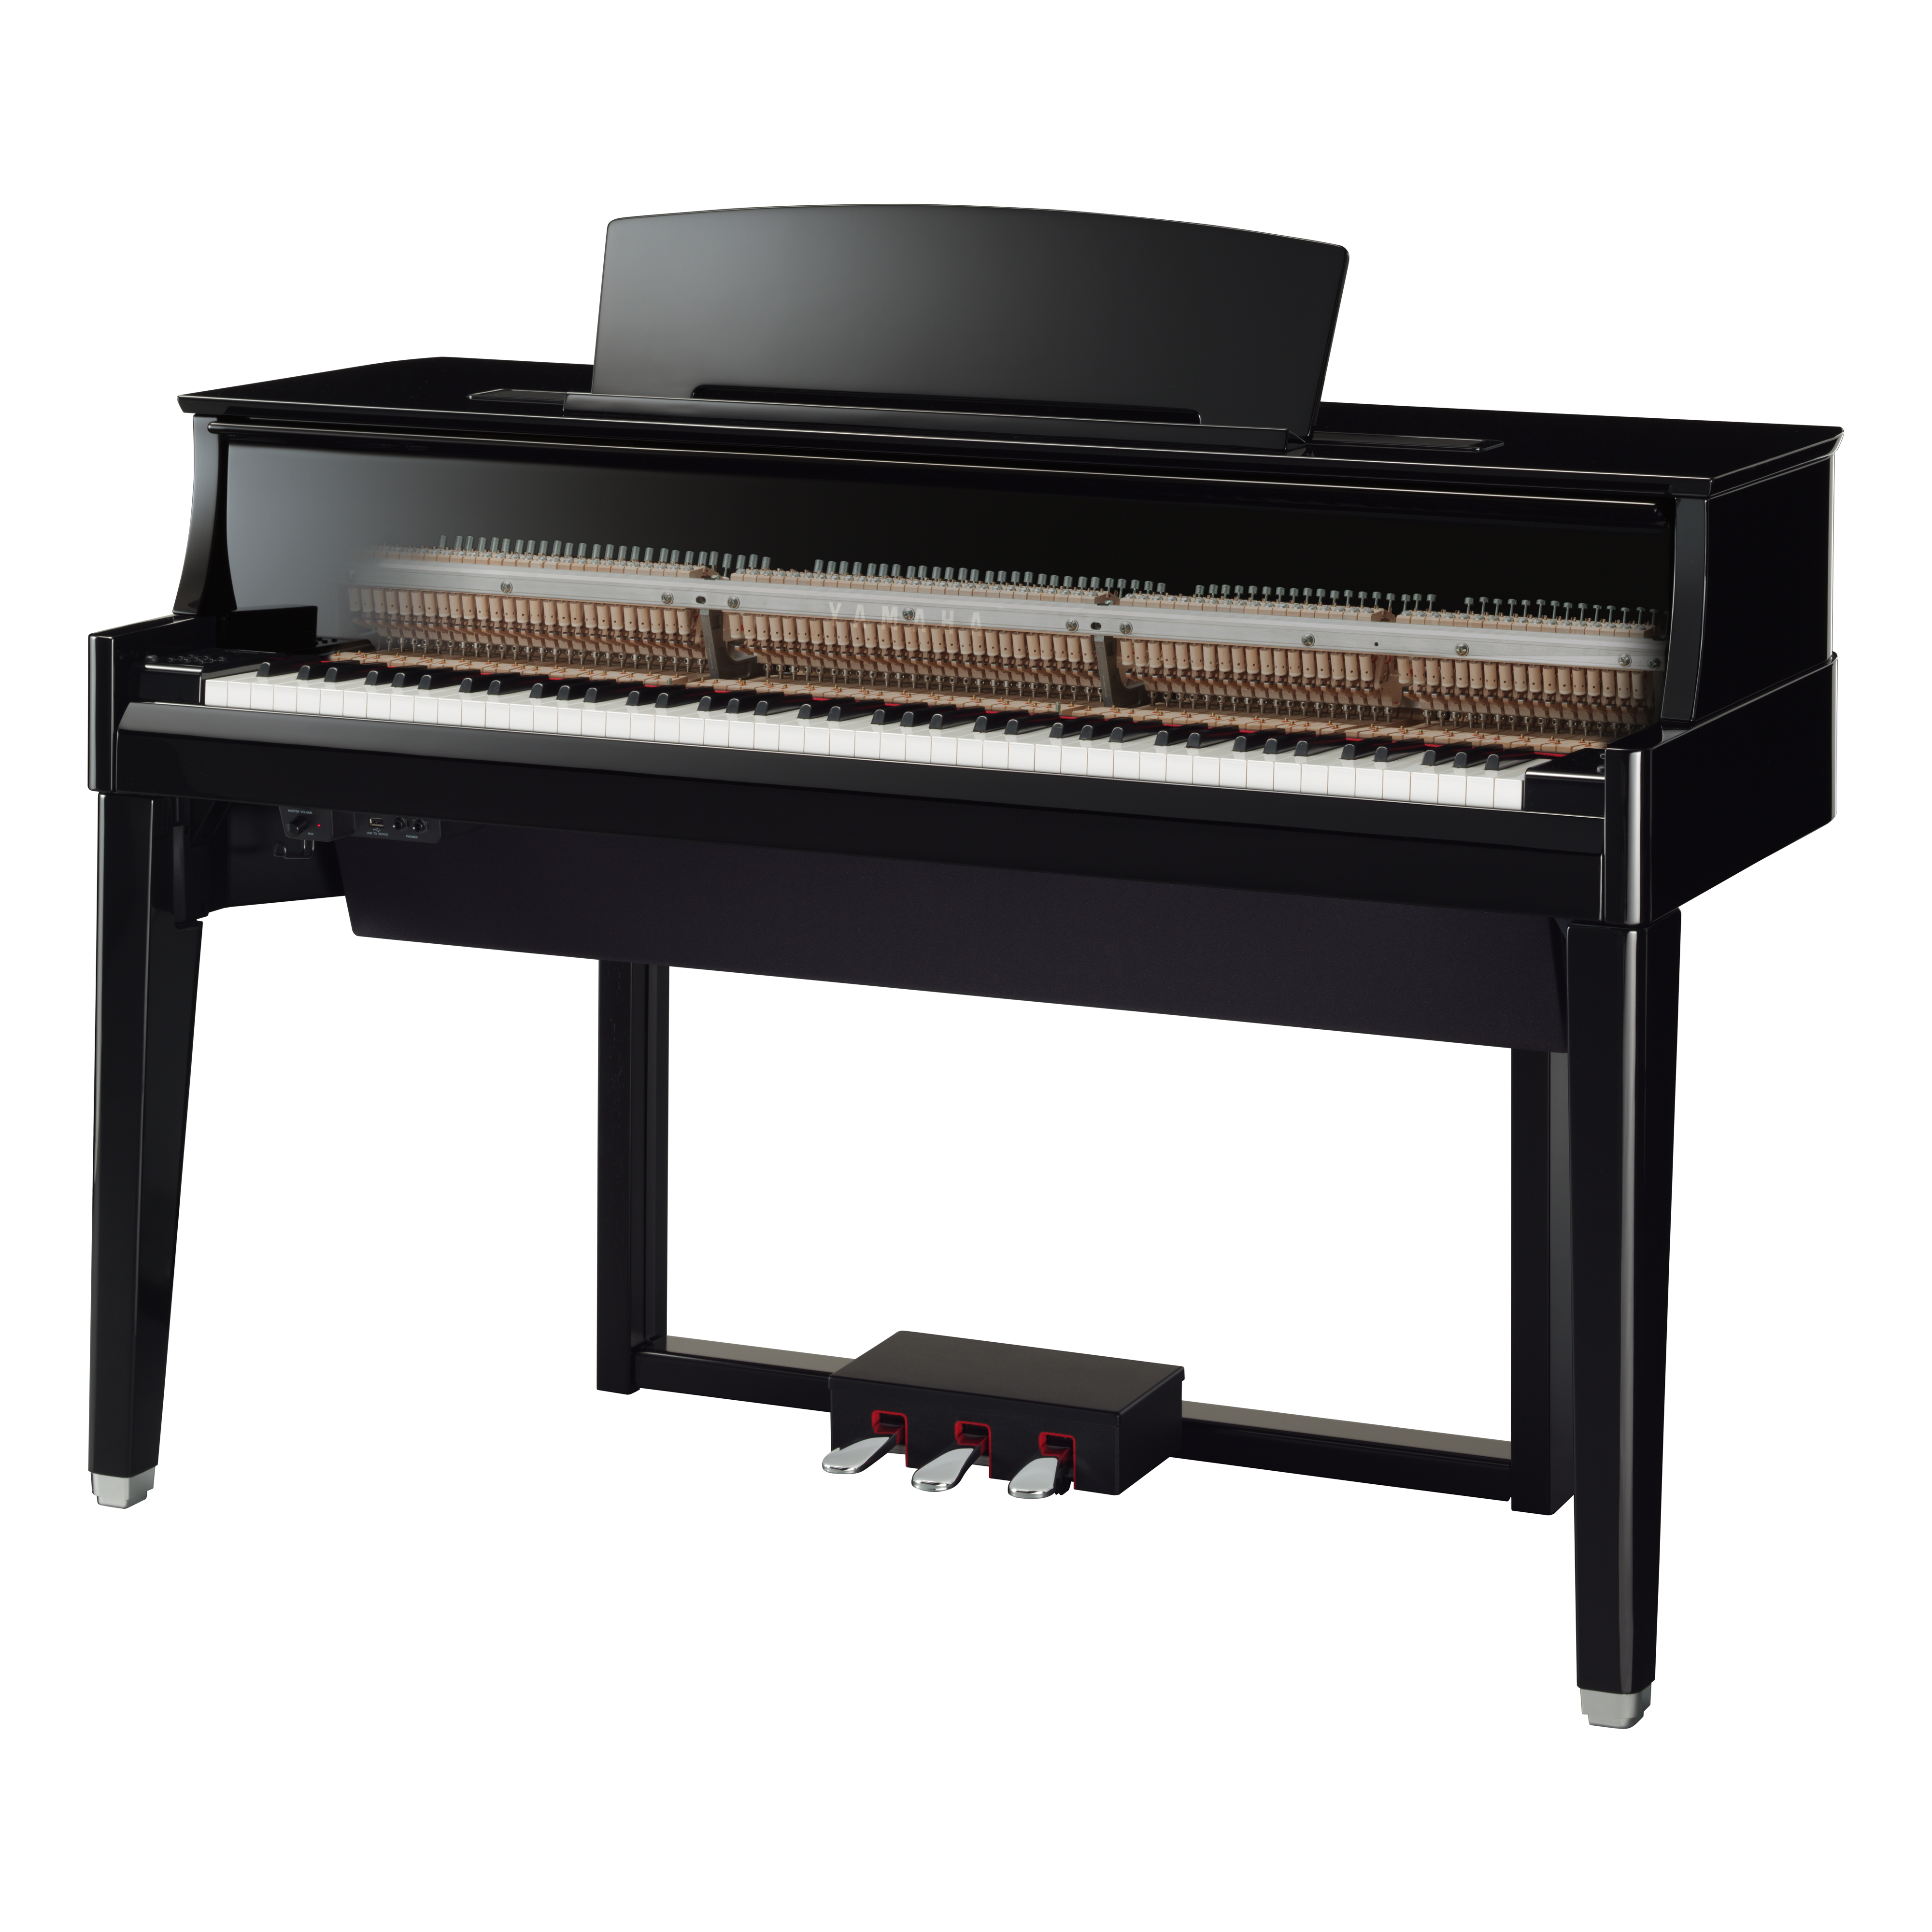 Espinoso Falange Espantar N1X - Overview - AvantGrand - Pianos - Musical Instruments - Products -  Yamaha - United States